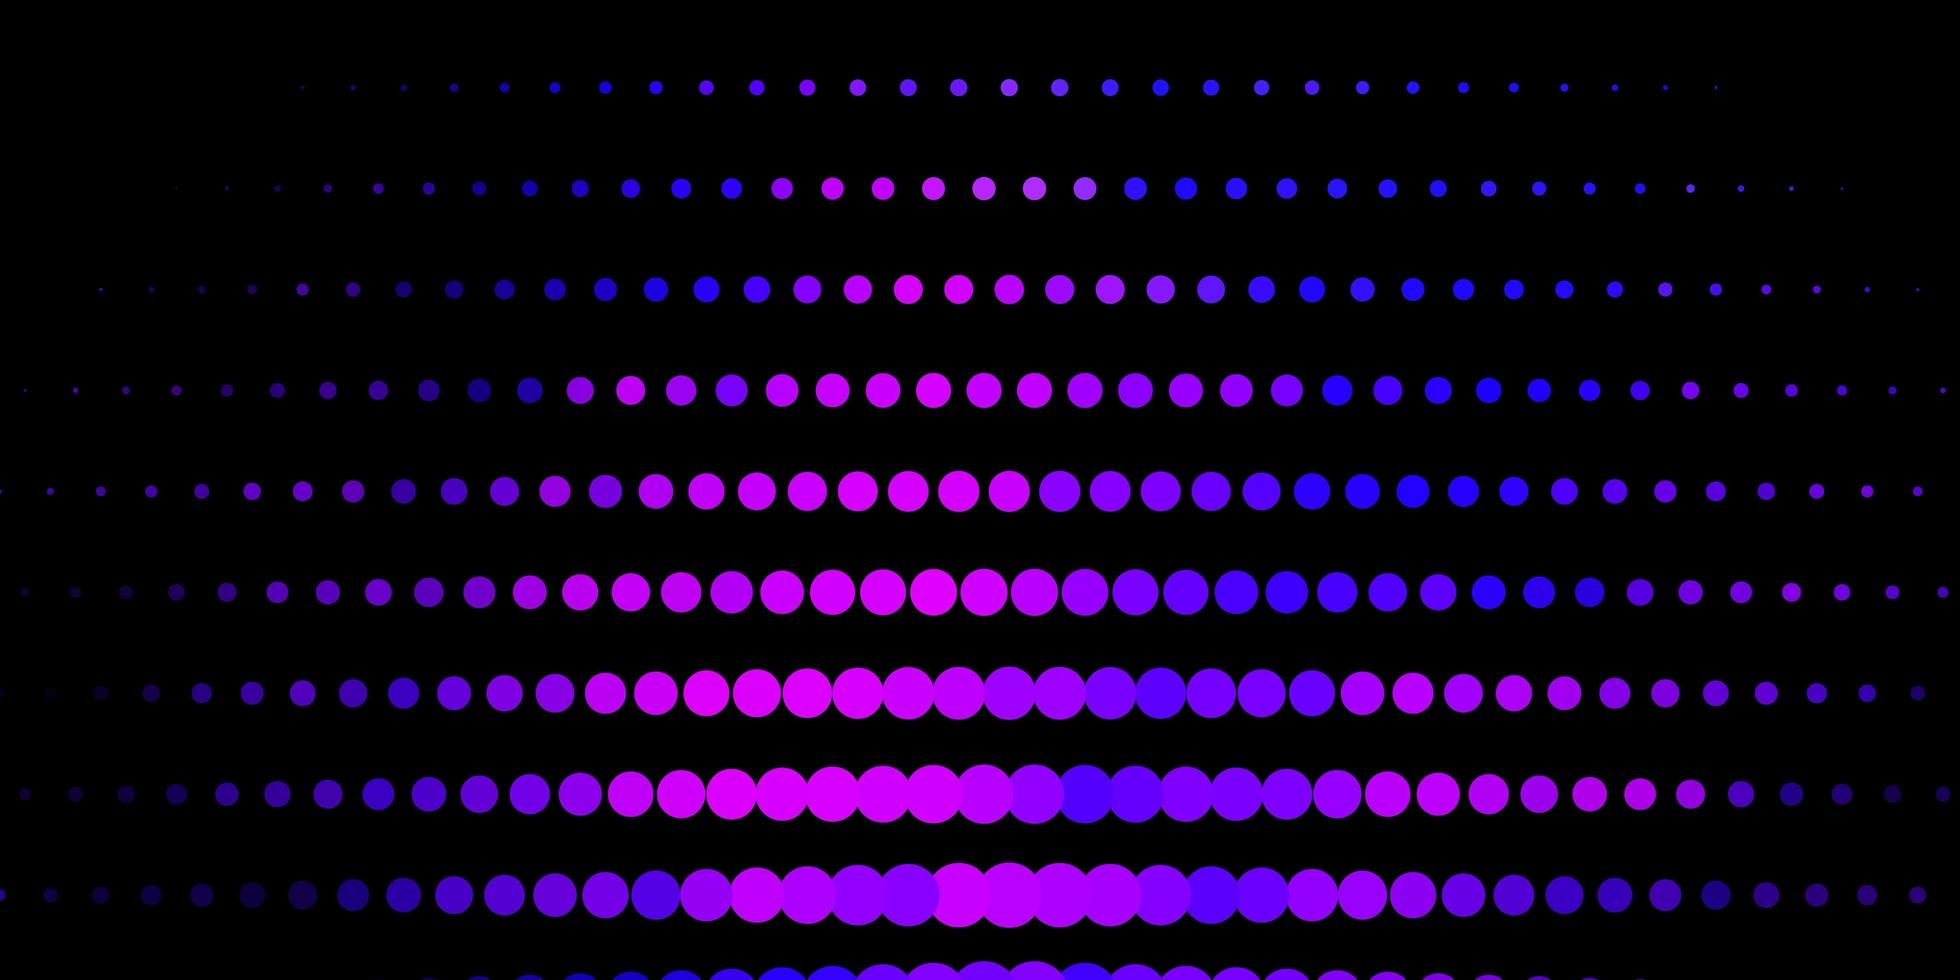 patrón de vector púrpura, rosa oscuro con esferas.